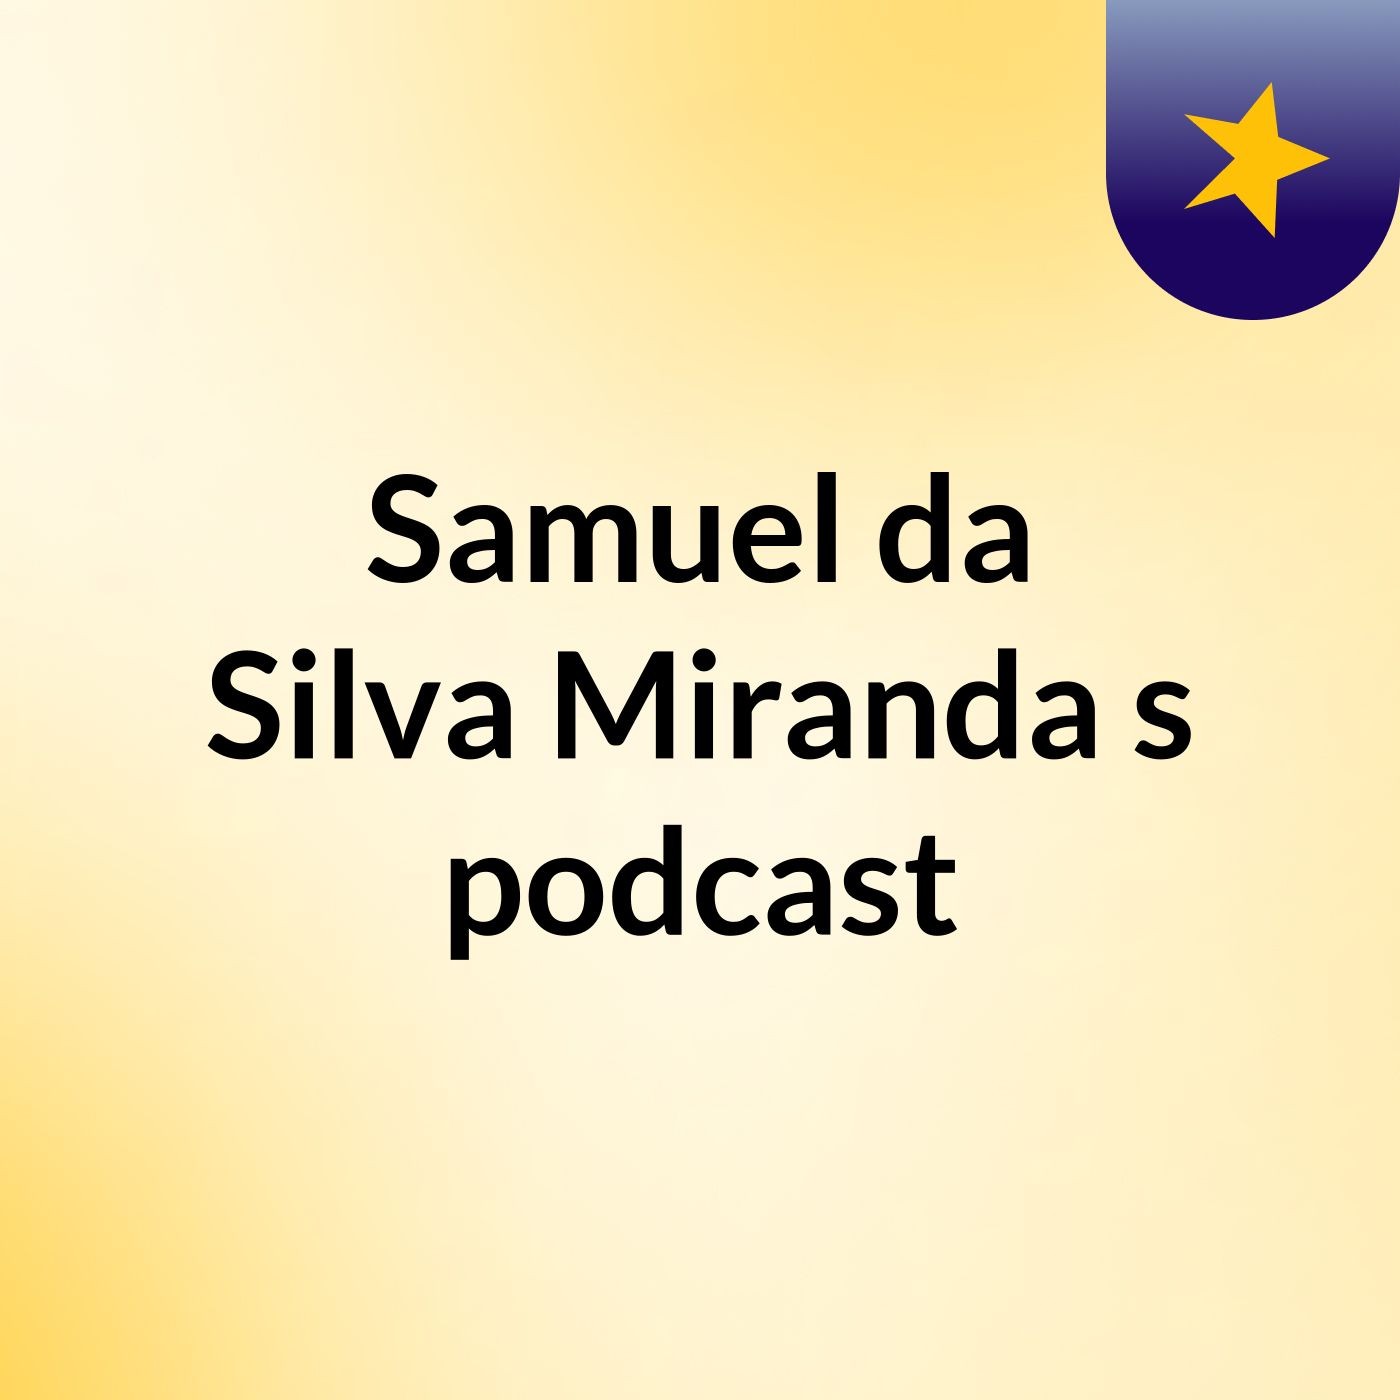 Samuel da Silva Miranda's podcast